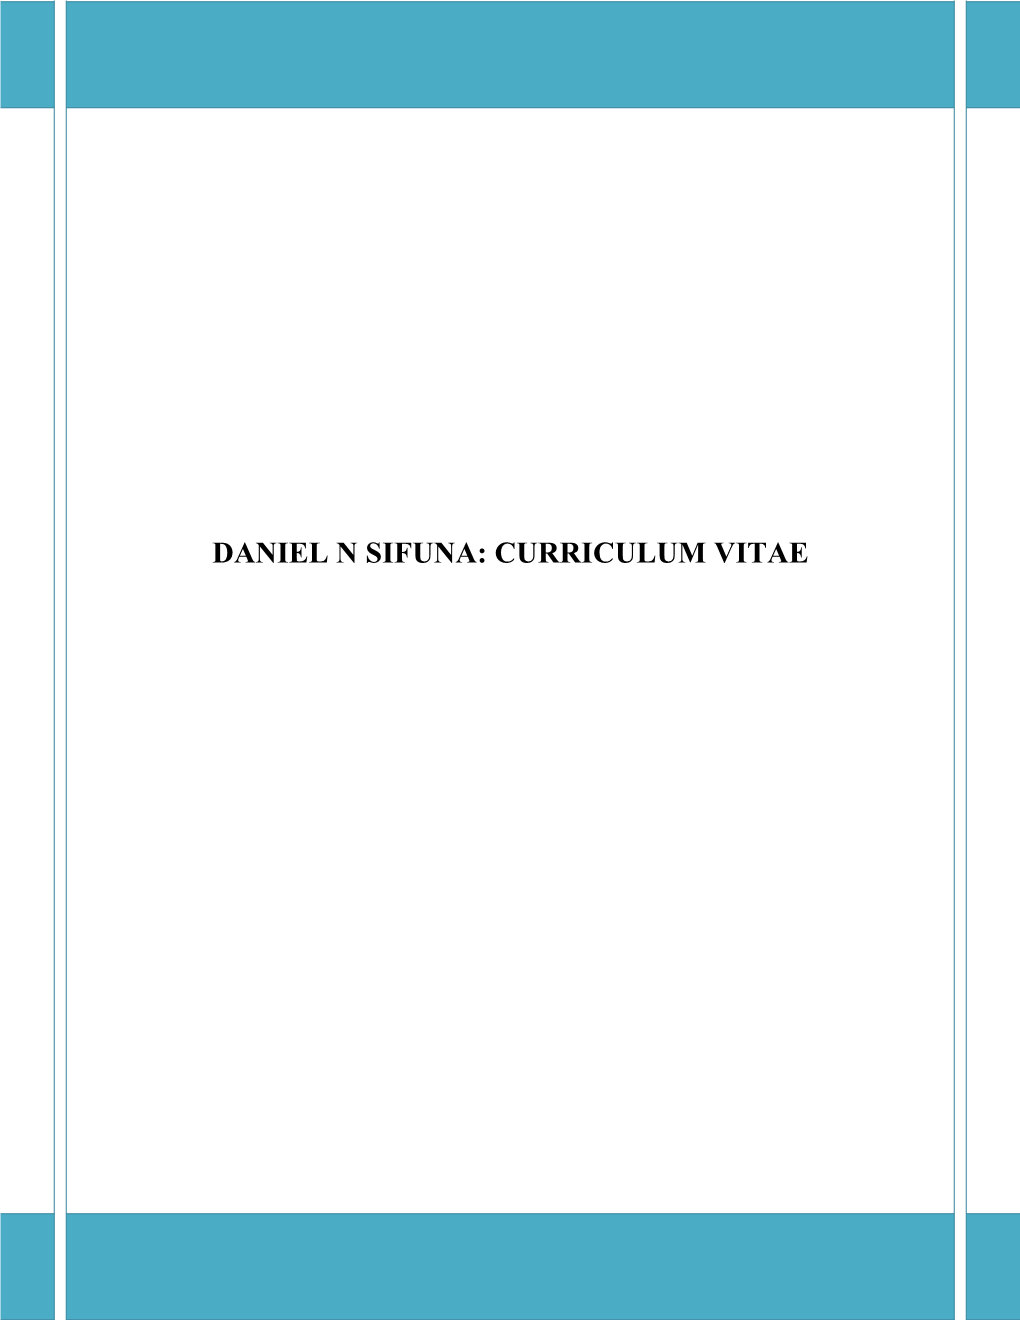 Daniel N Sifuna: Curriculum Vitae